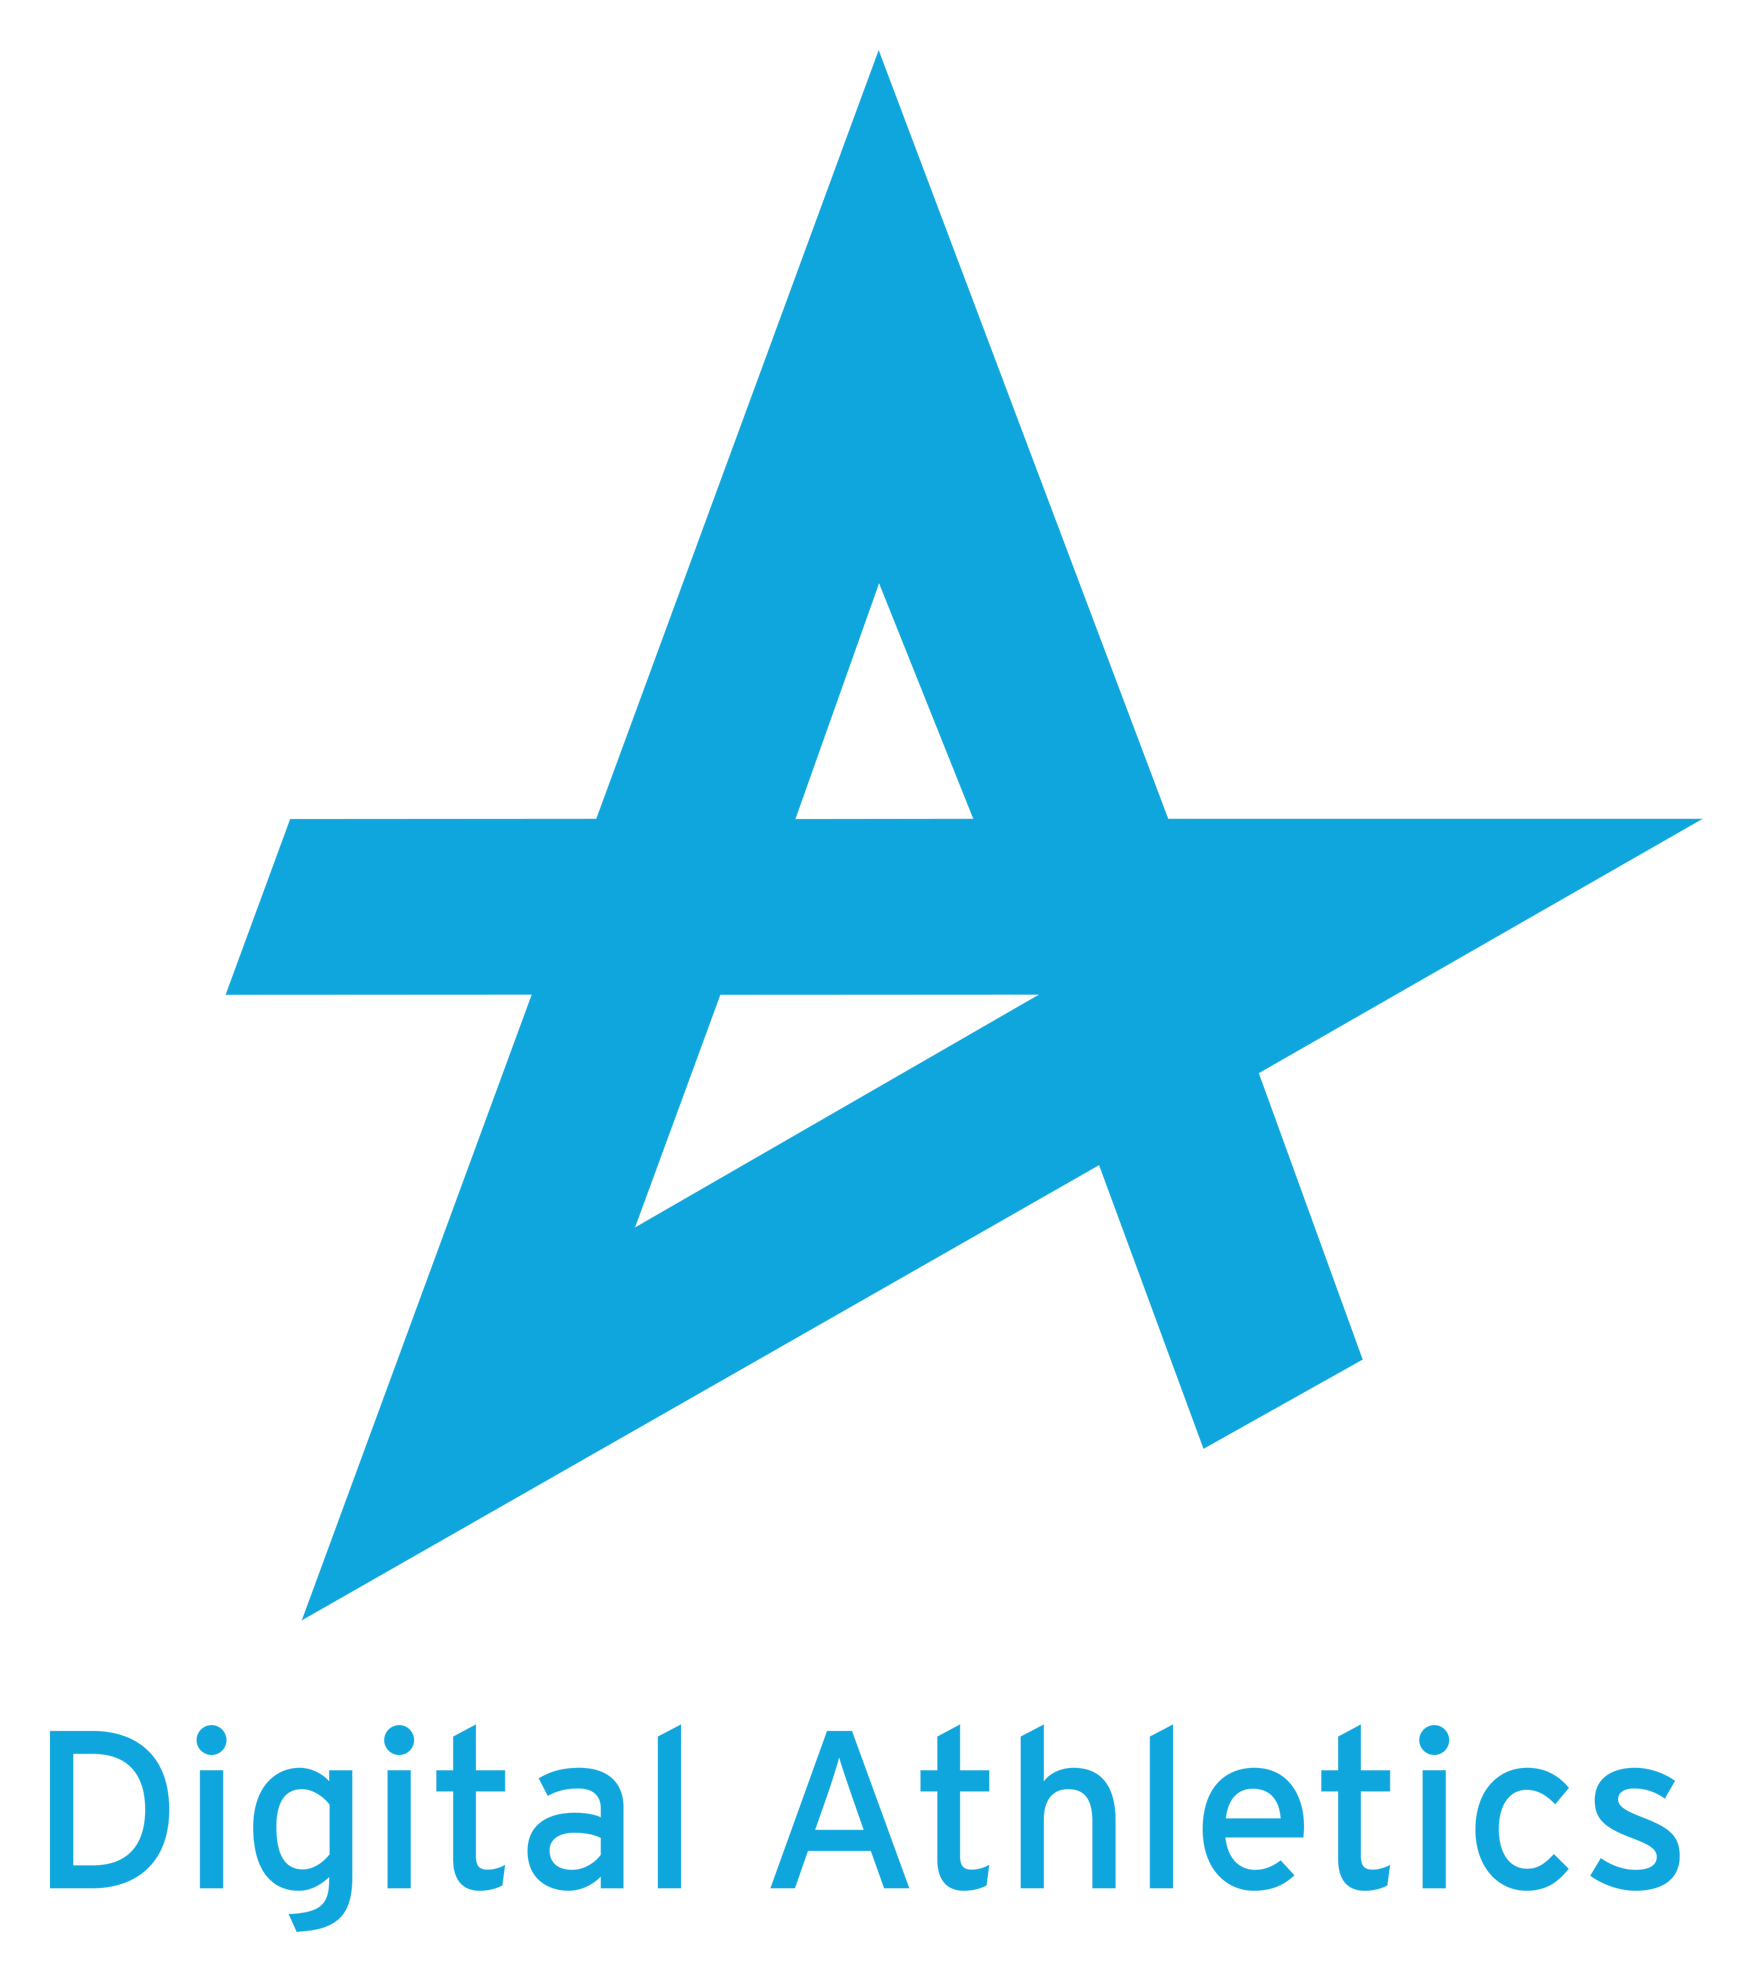 Digital Athletics logo